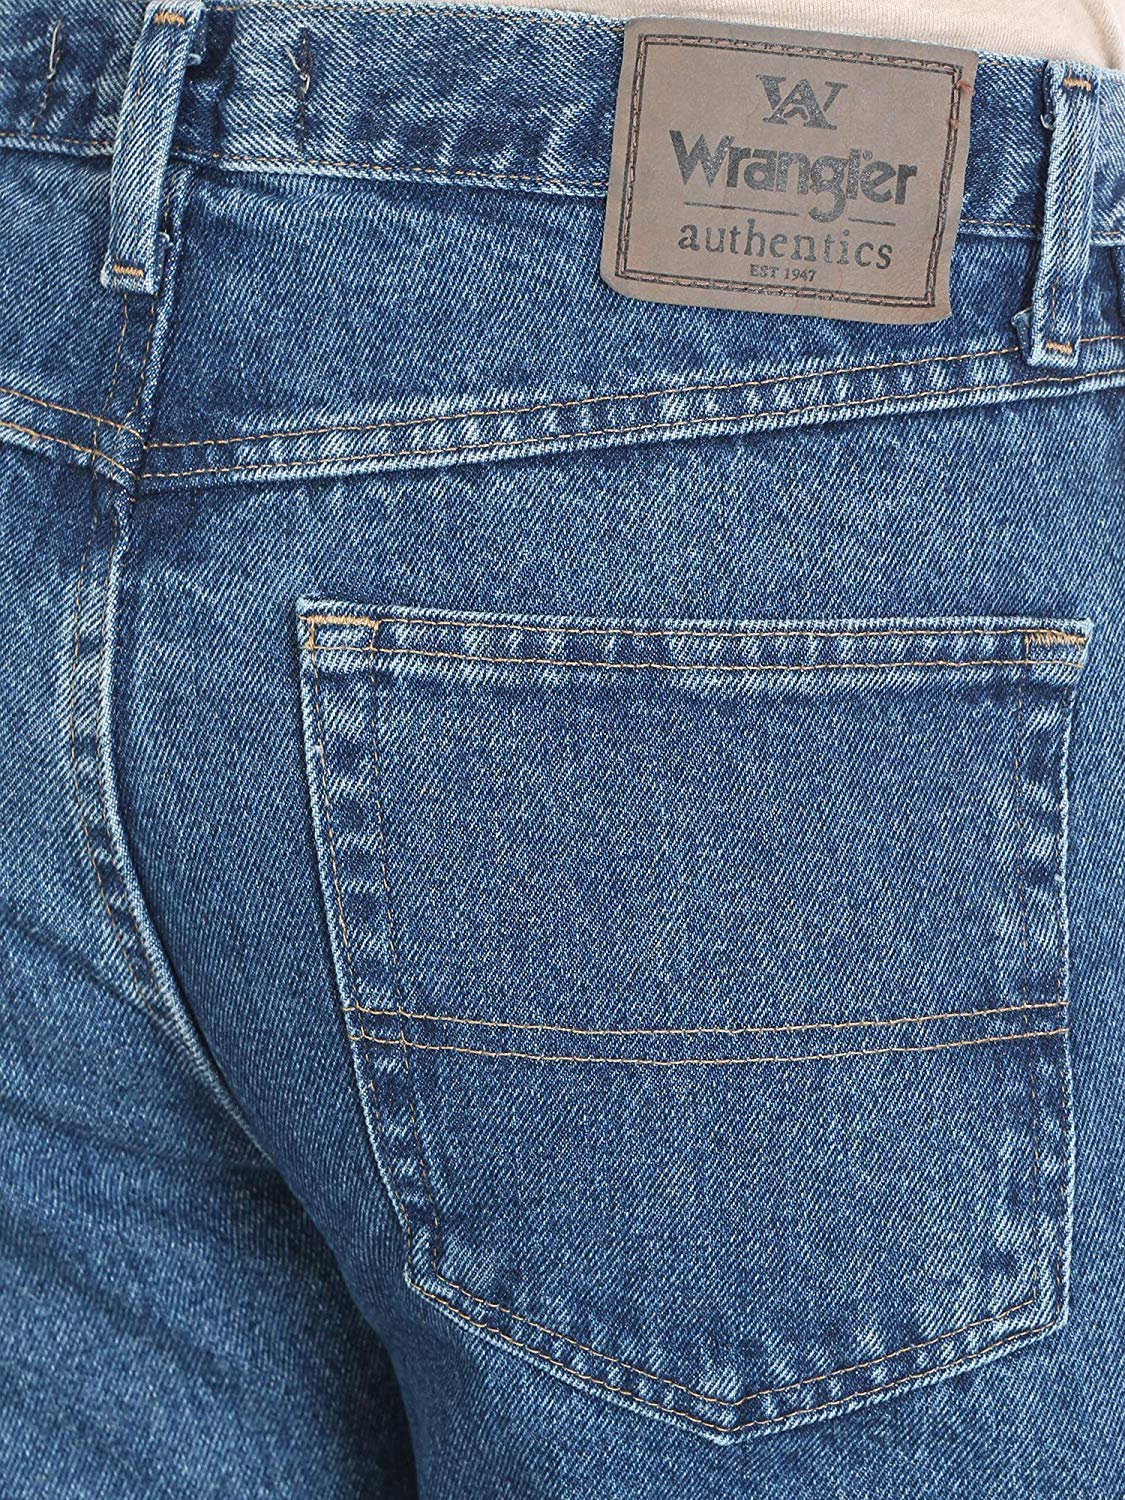 Wrangler Authentics Men's Classic 5-Pocket Regular Fit Cotton Jean, Stonewash Mid, 36W x 32L